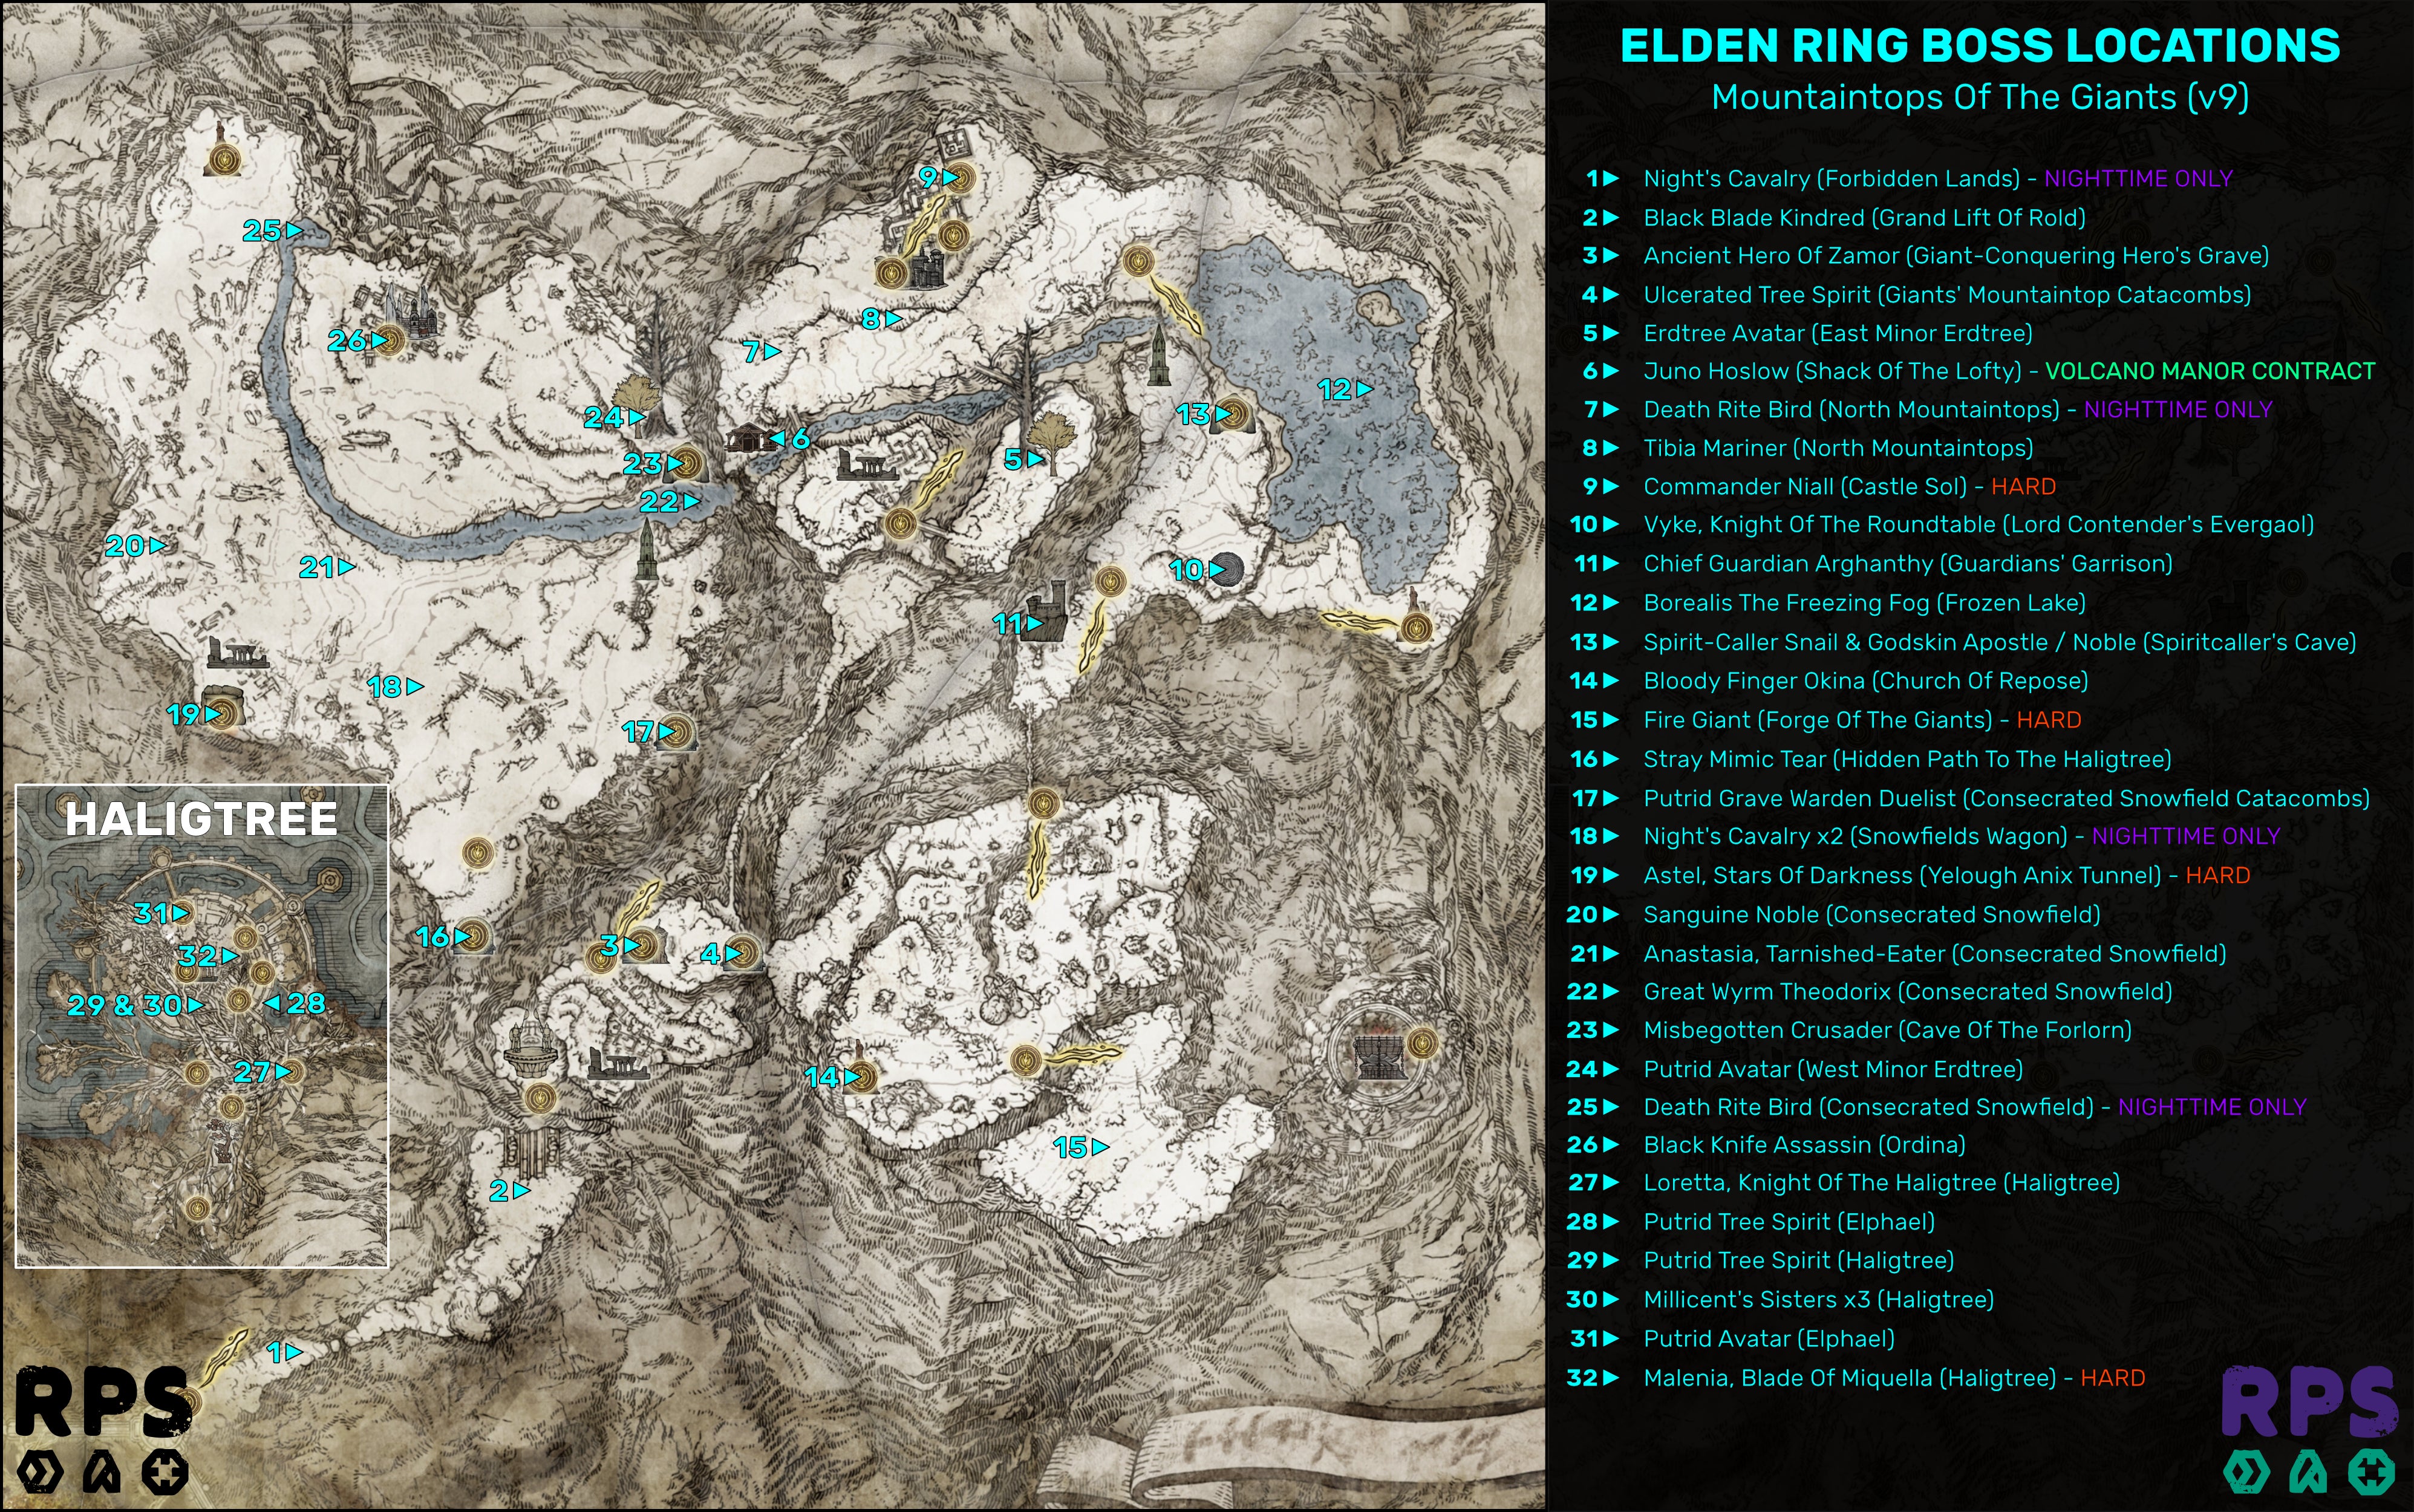 Elden Ring boss locations and ideal boss order Rock Paper Shotgun